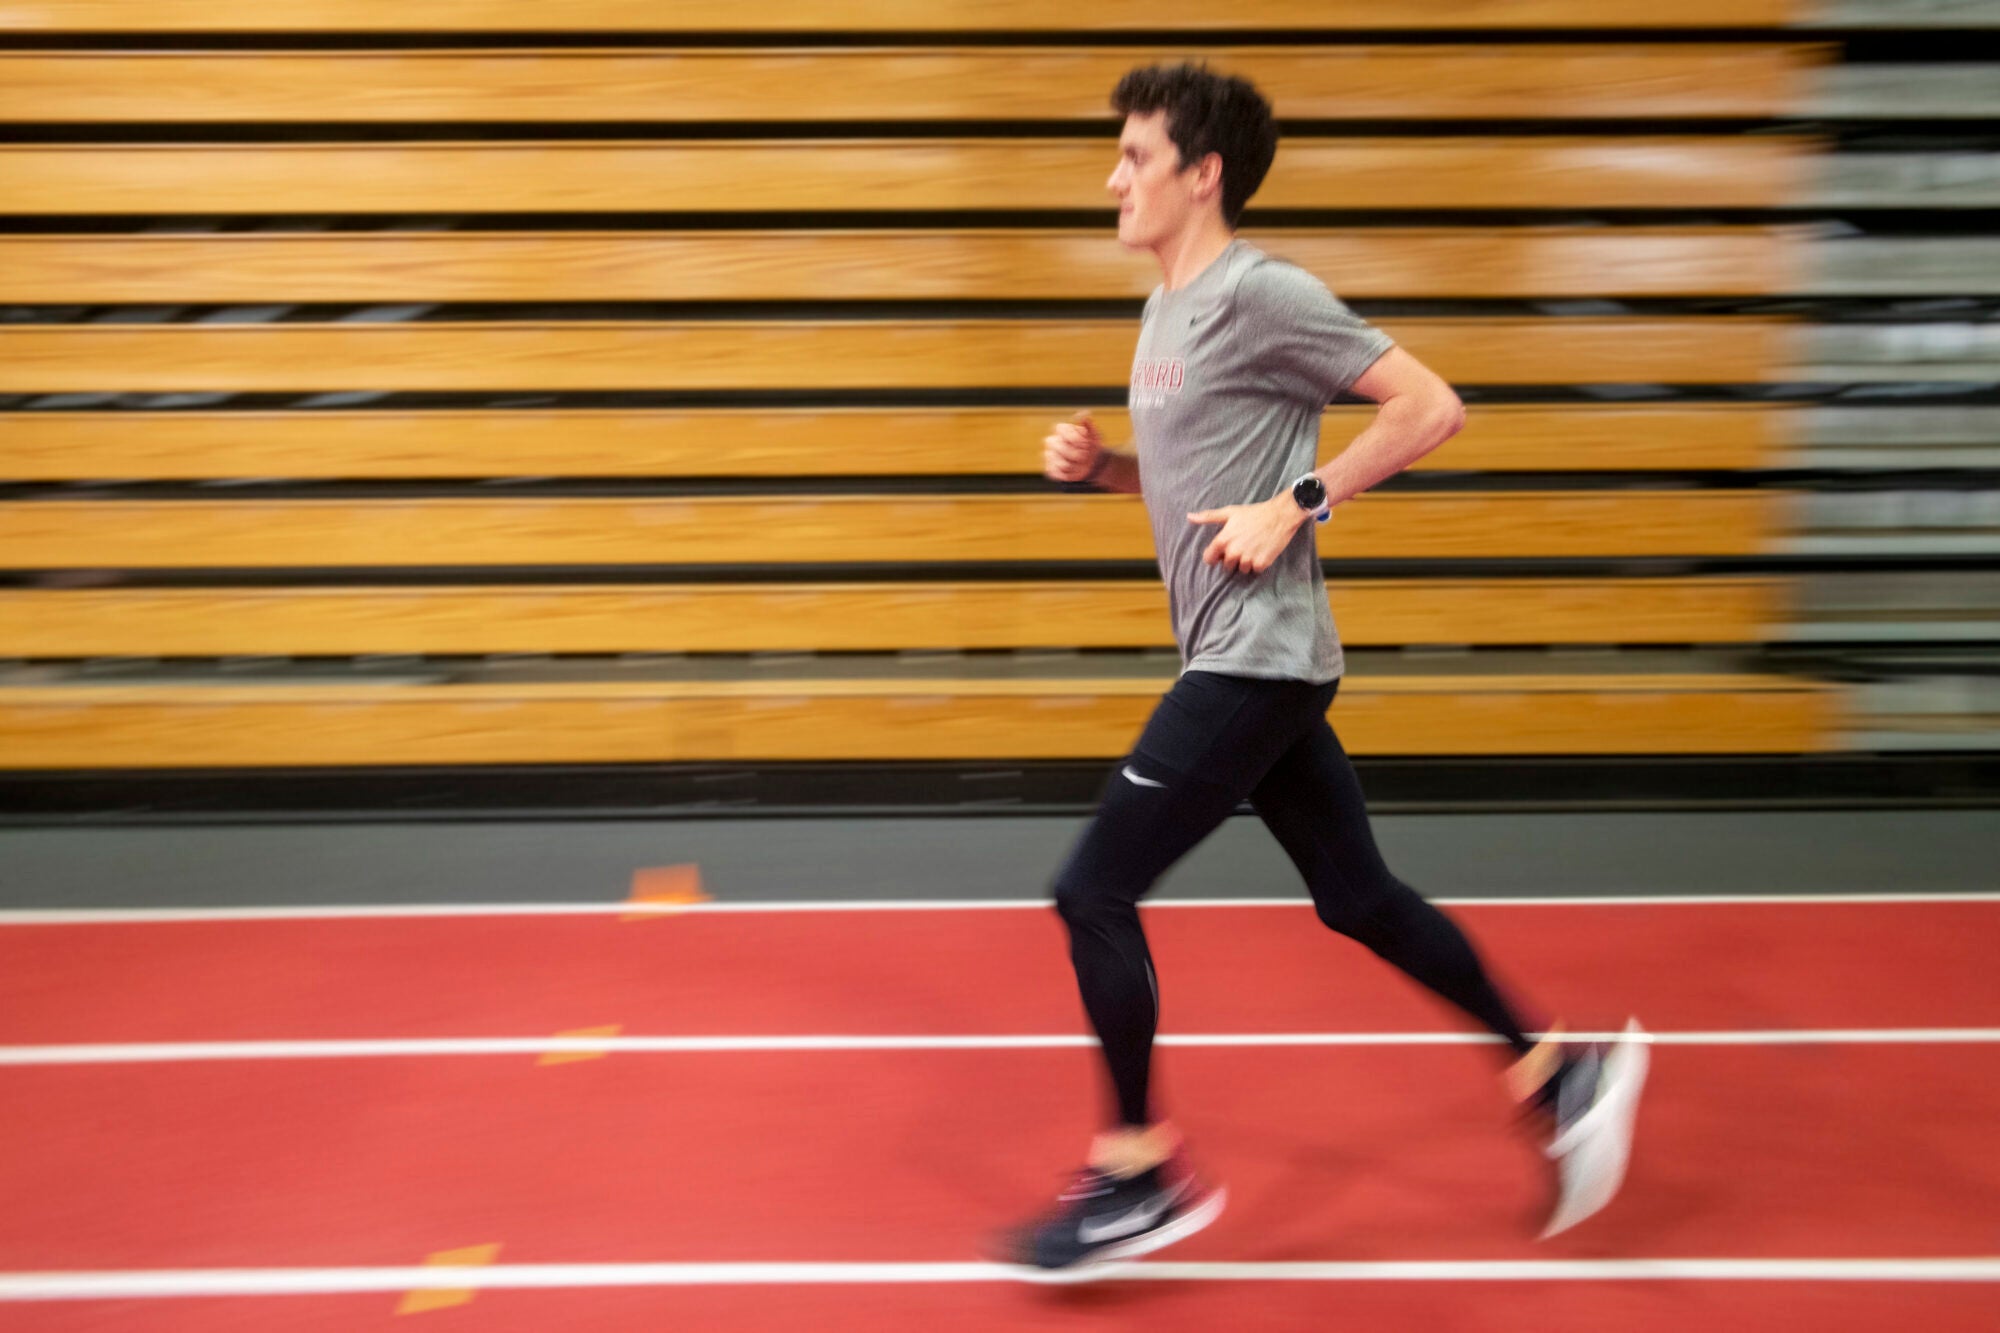 Graham Blanks running on a track